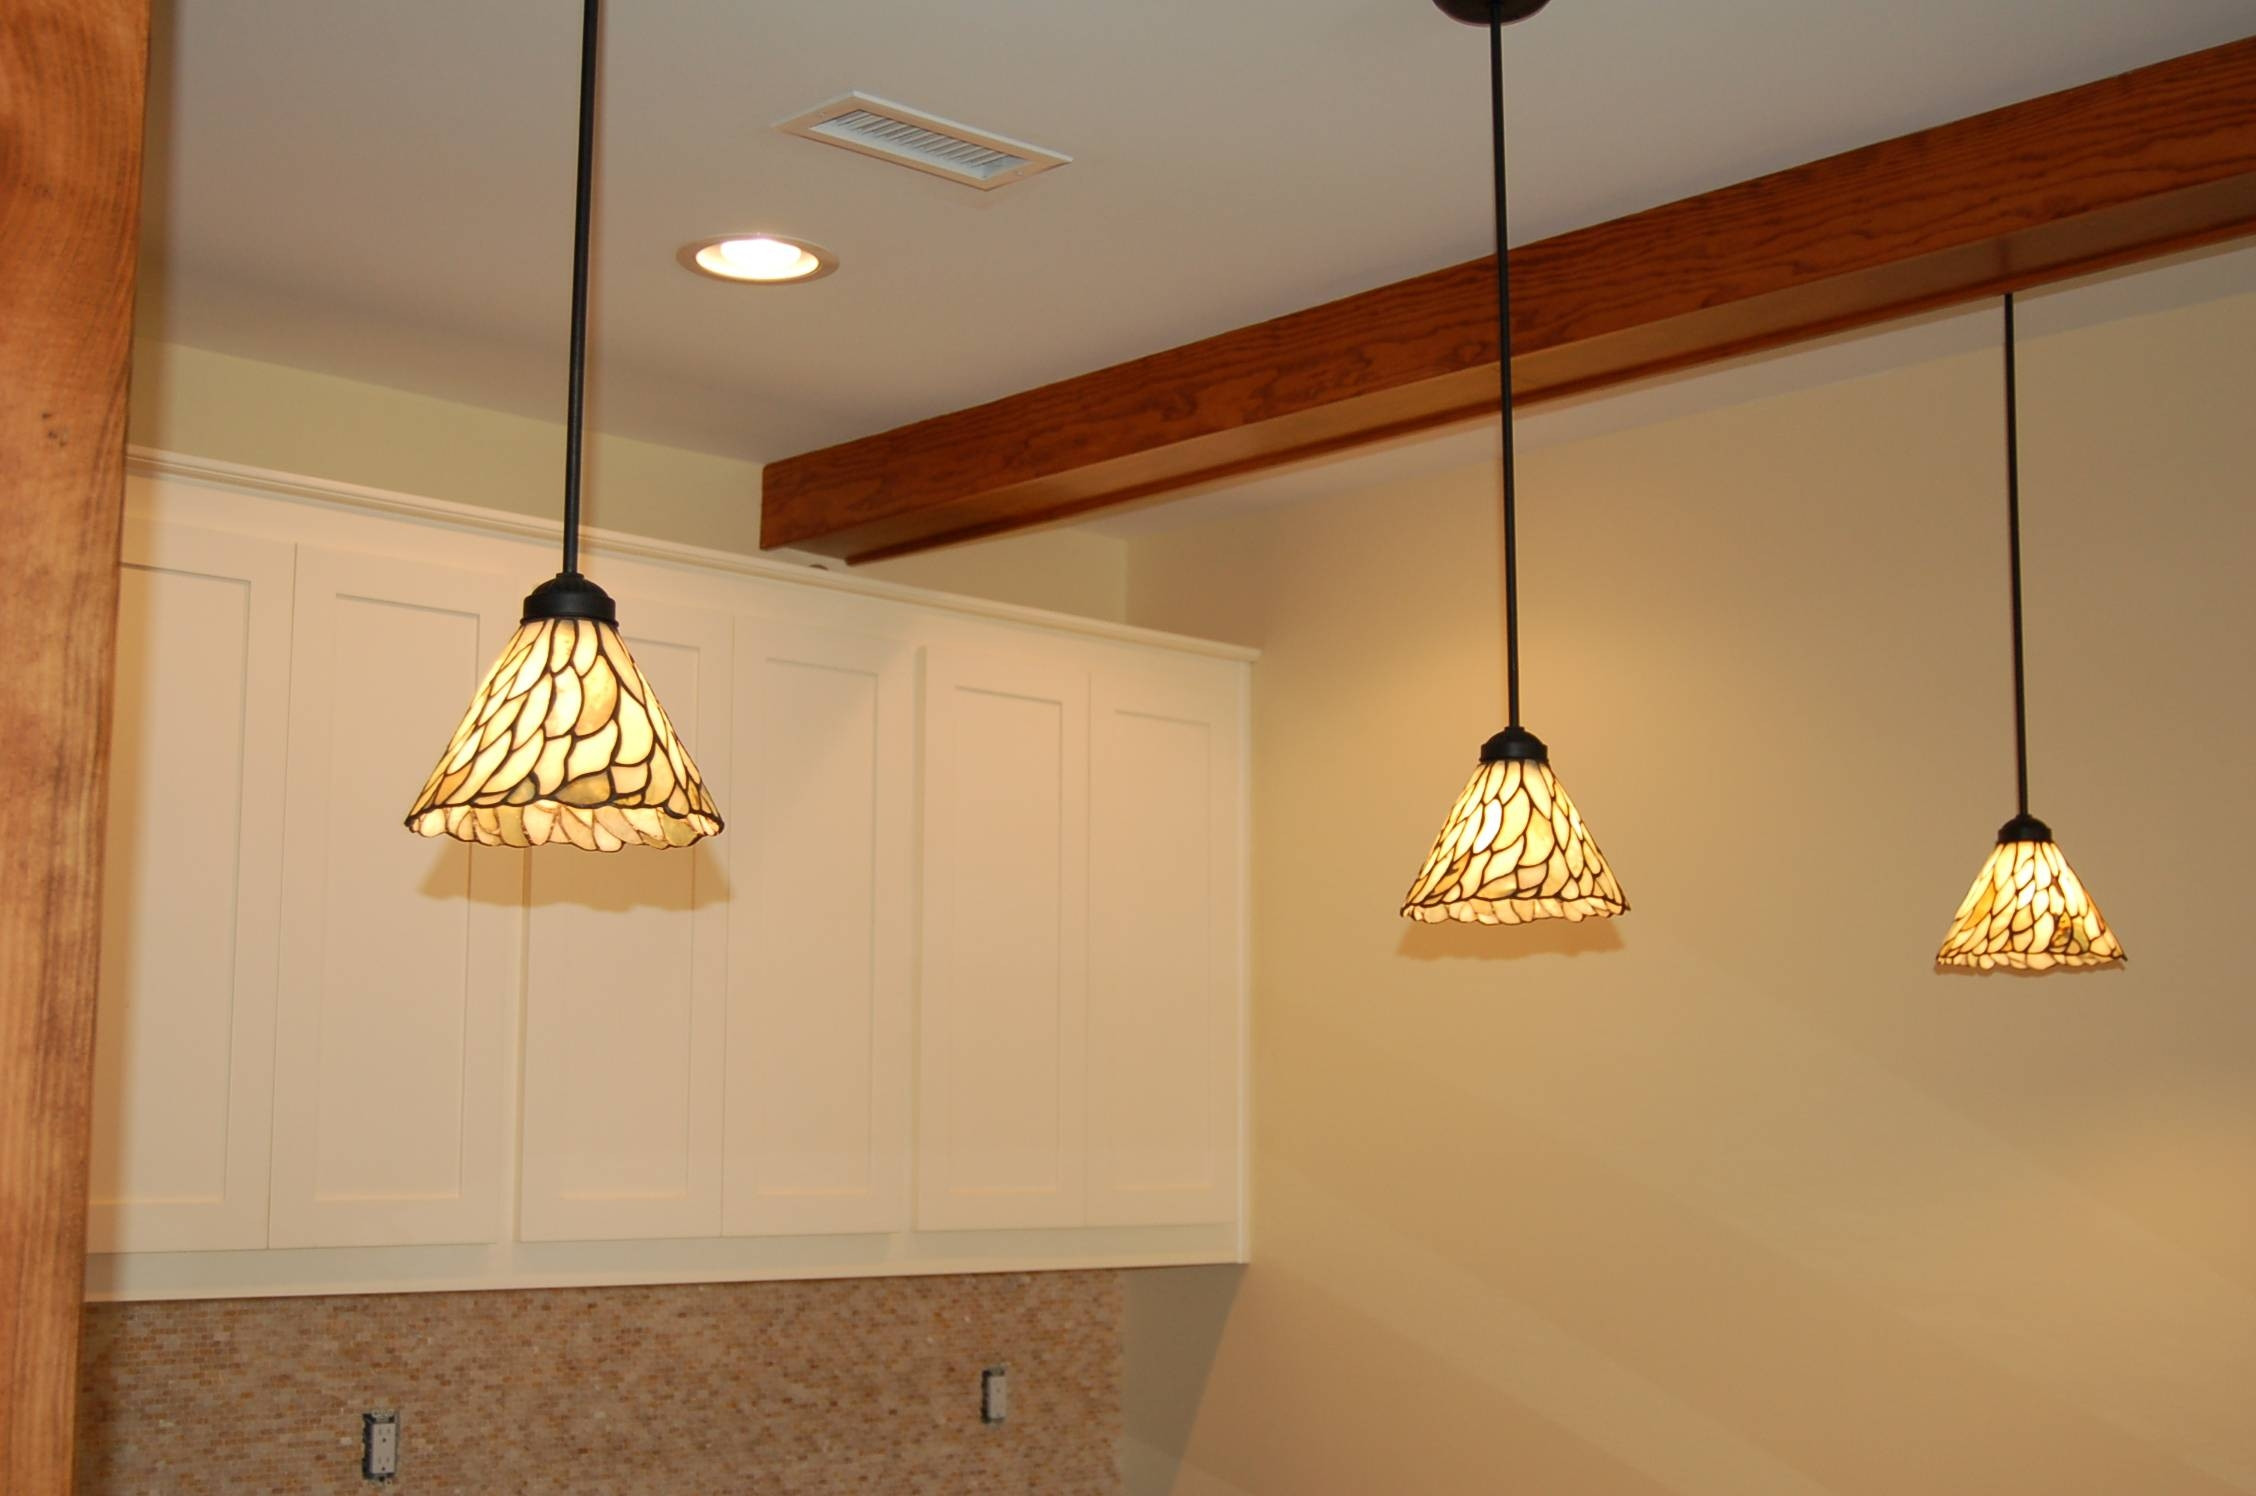 tiffany style inverted pendant kitchen light